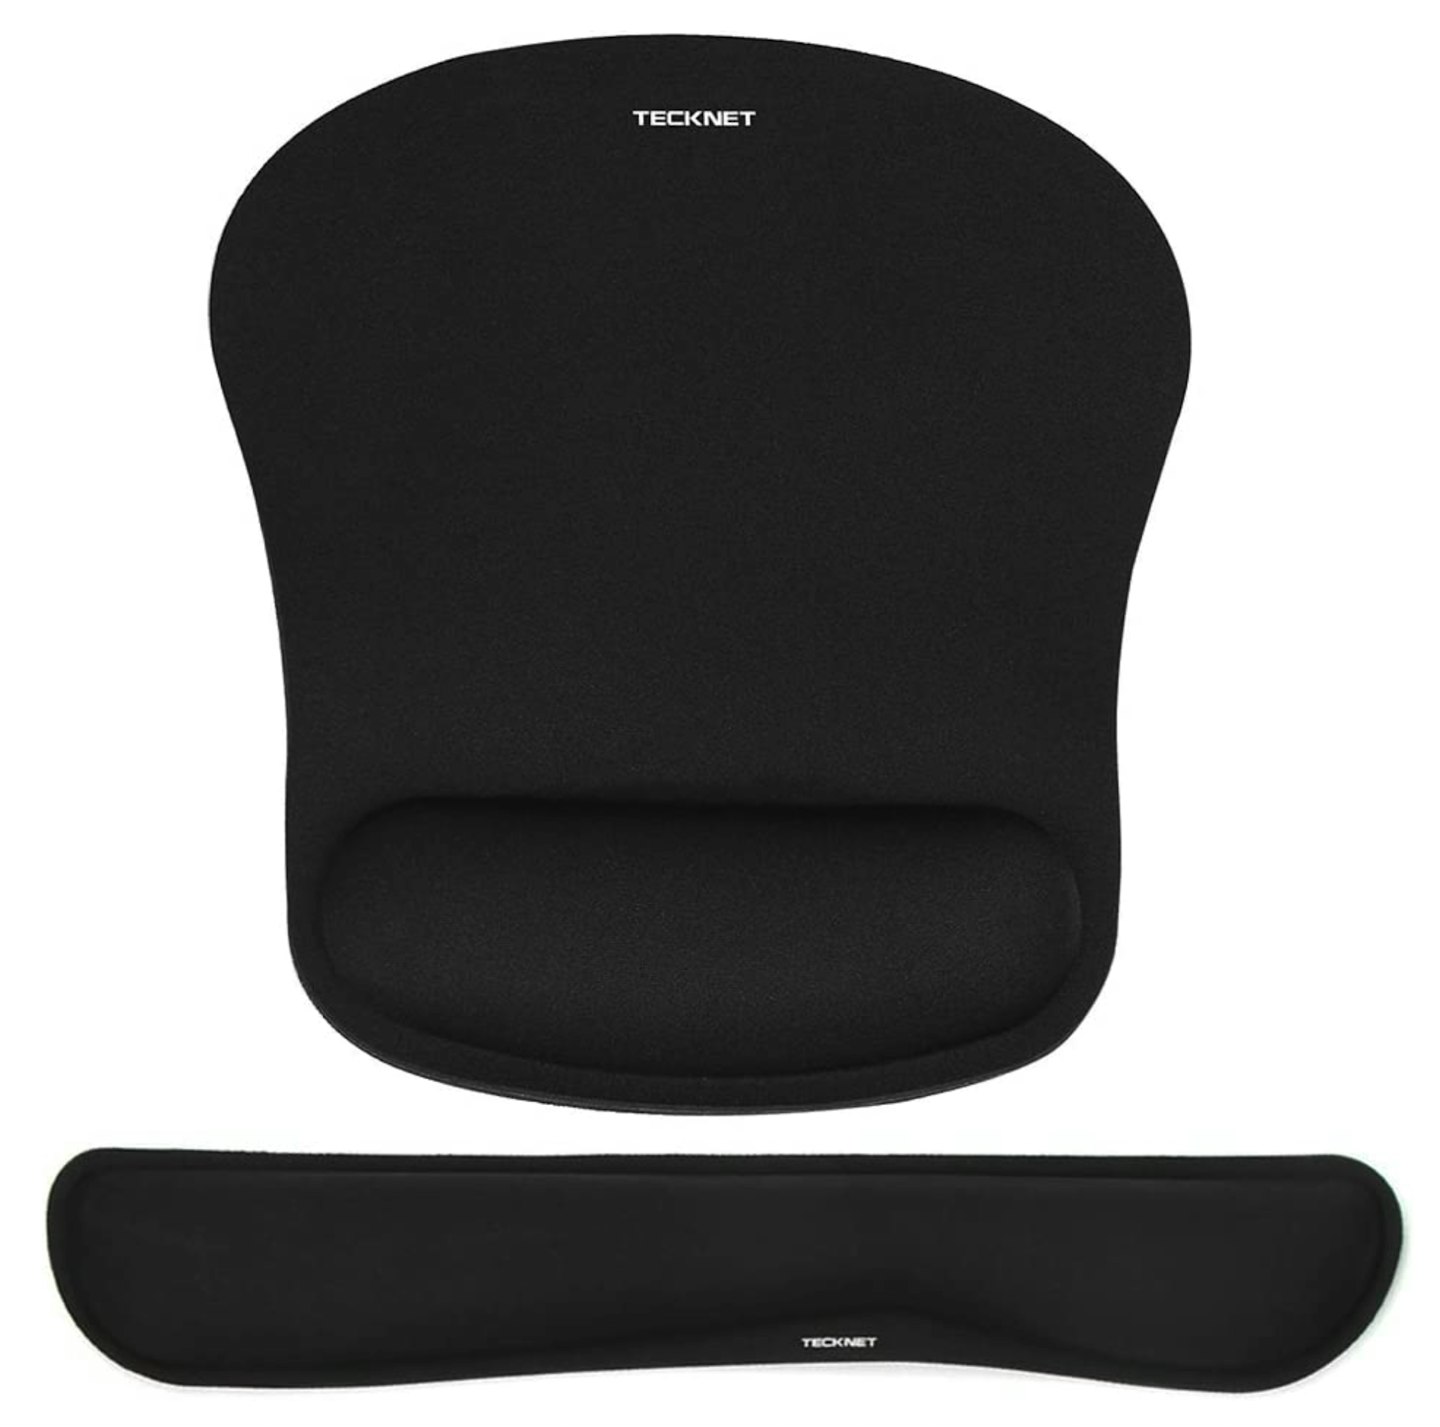 TECKNET Wrist Rest Mat, Keyboard and Mouse Wrist Support Pad Set